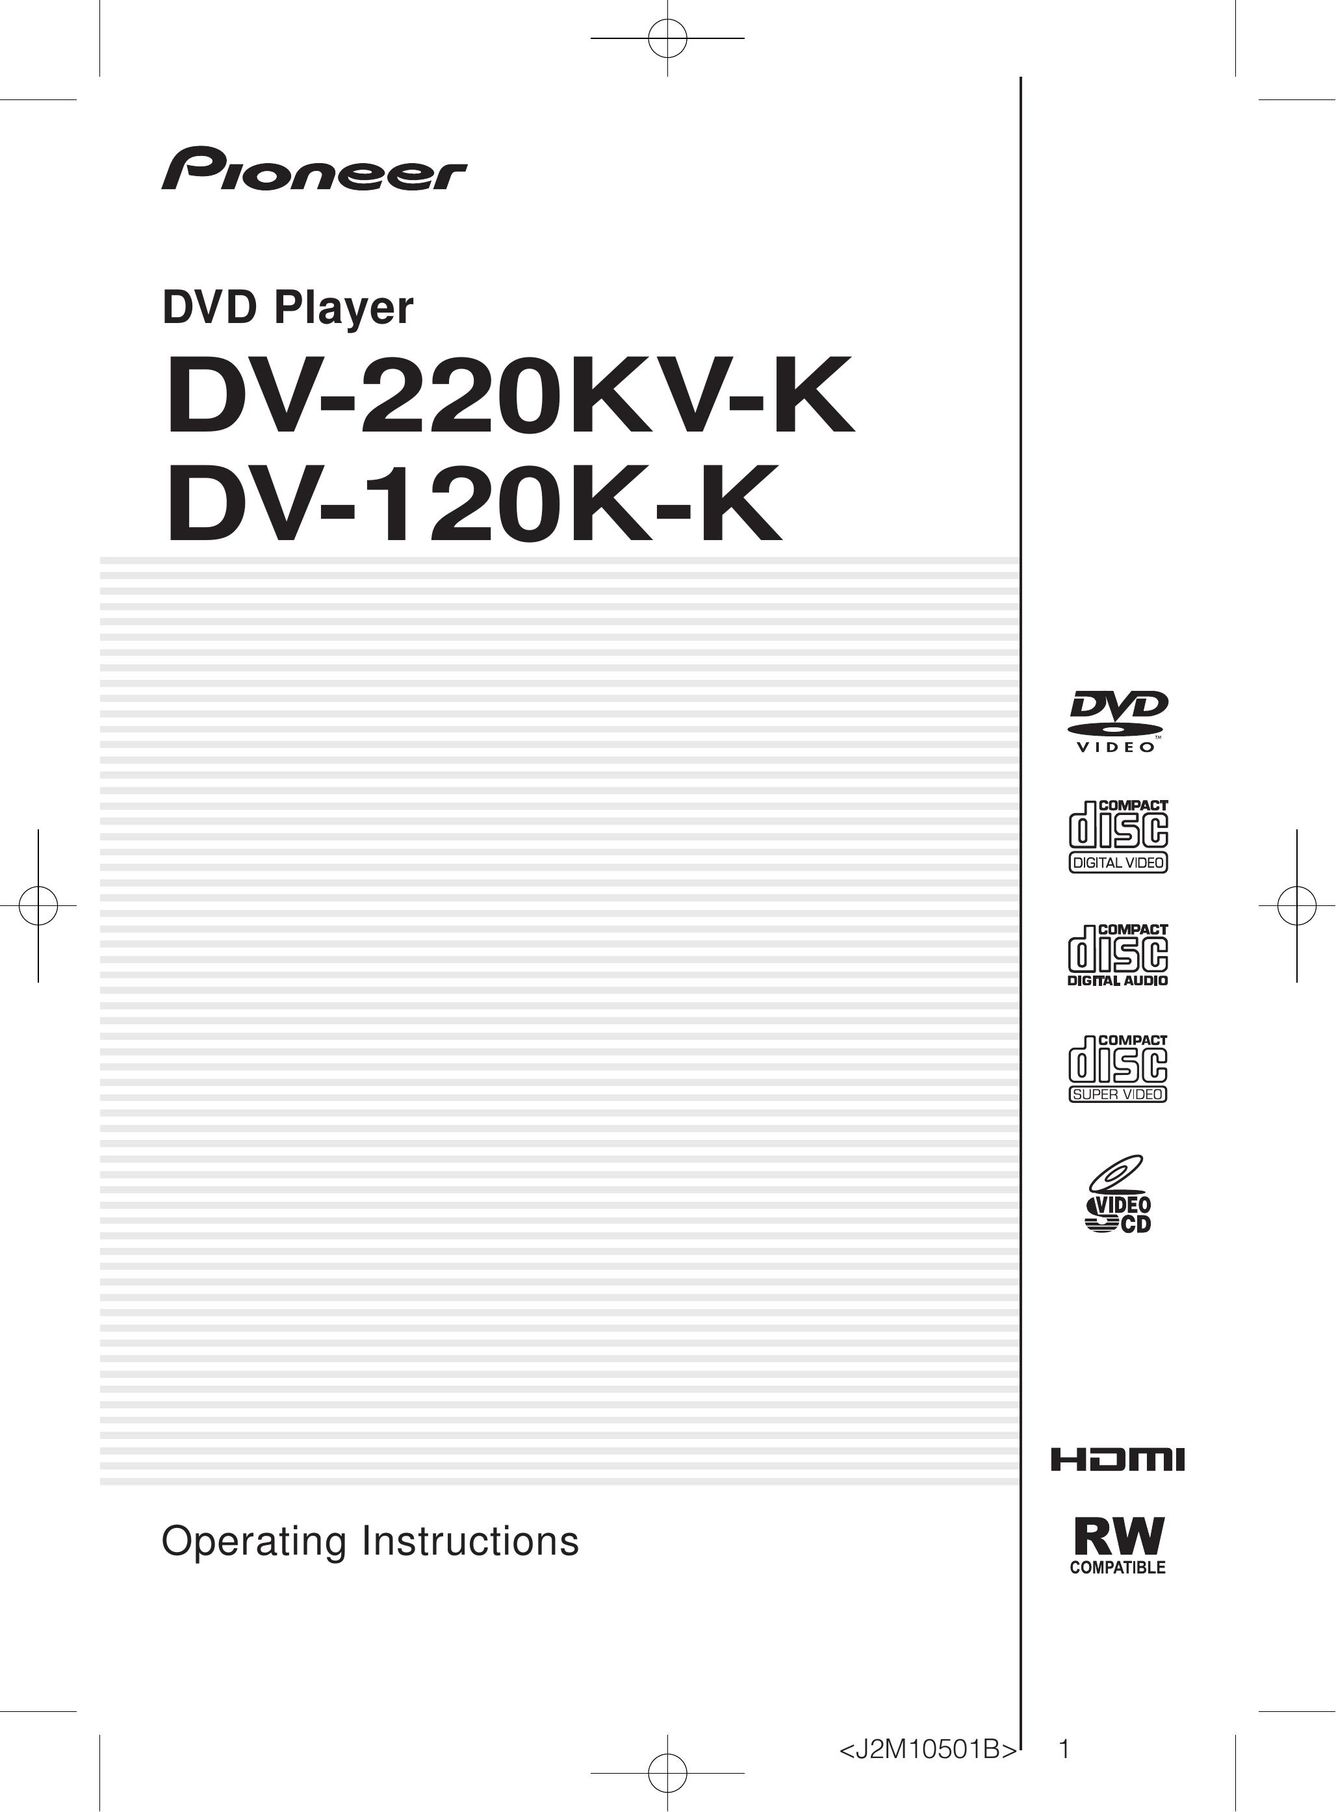 Panasonic DV-220KV-K DVD Player User Manual